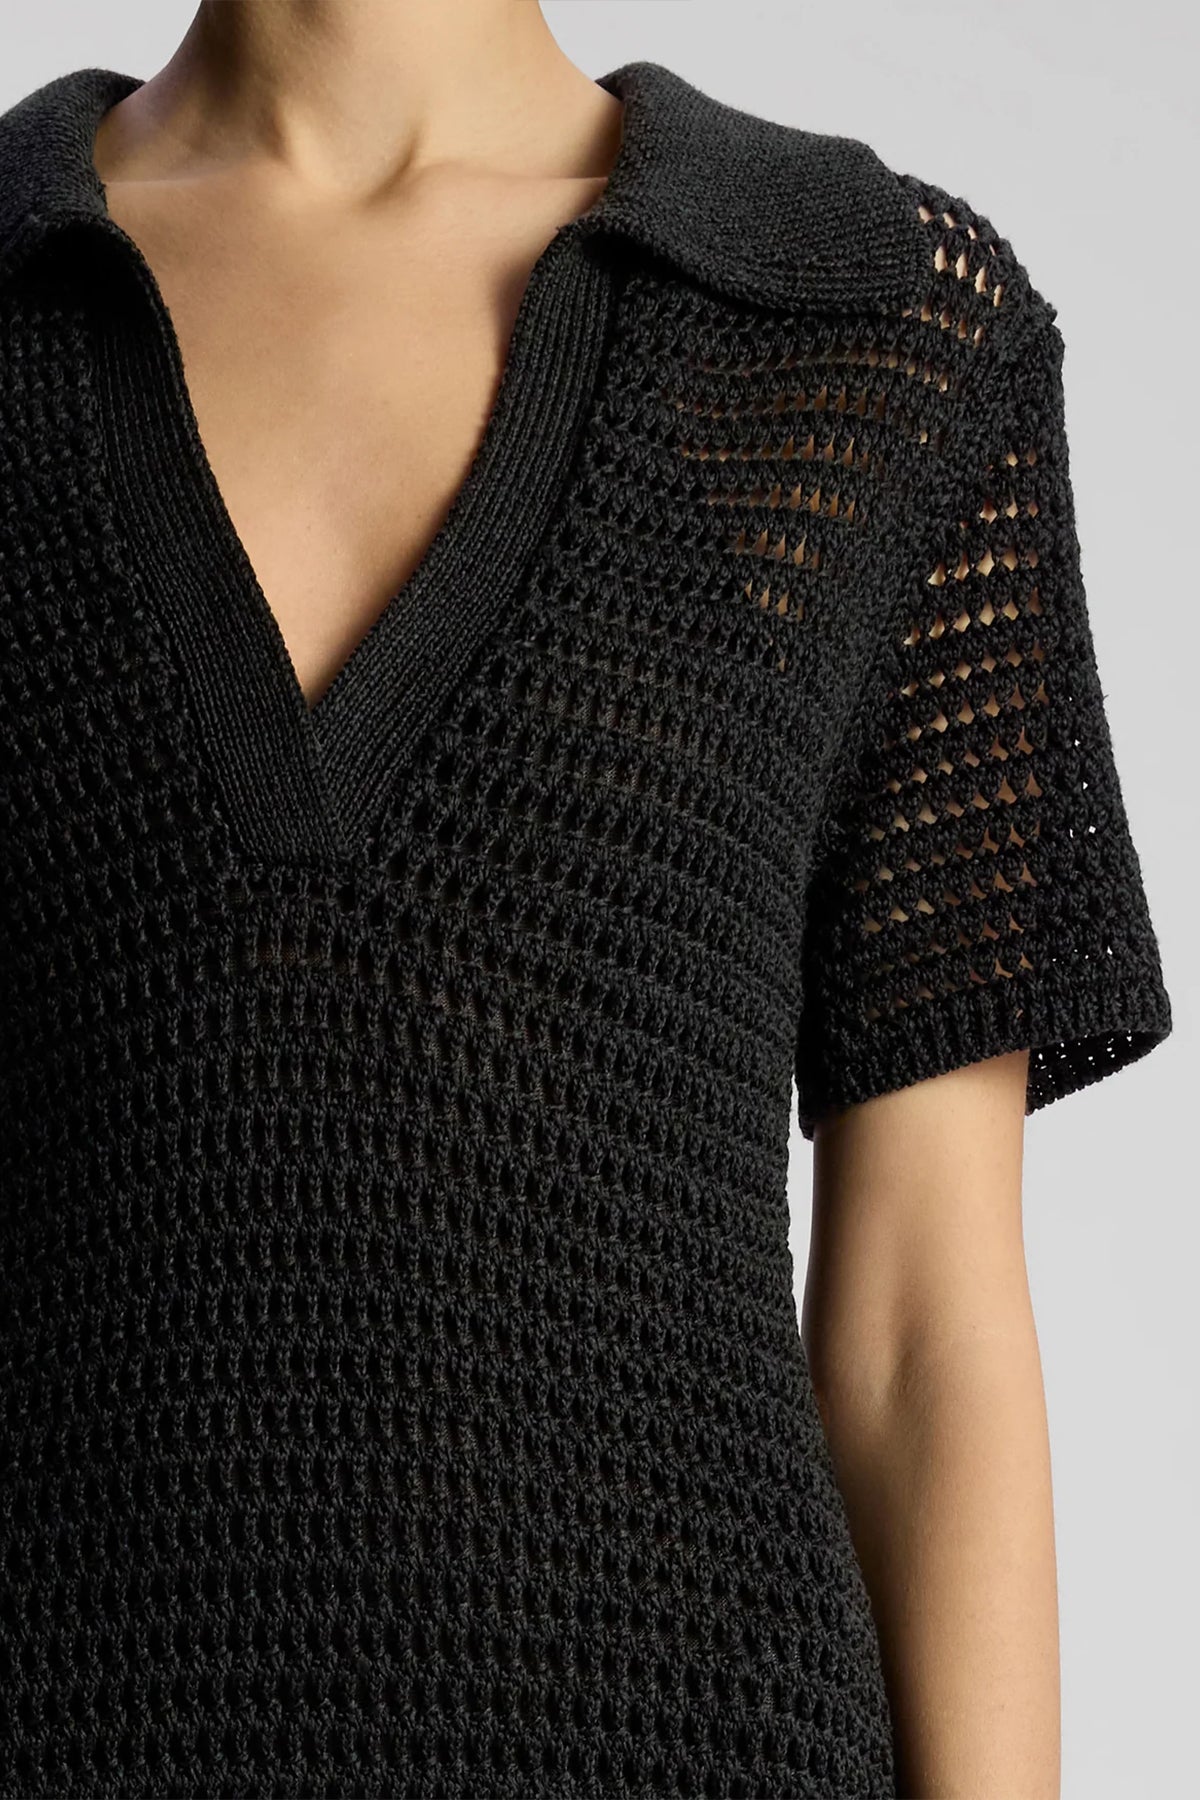 Valerie Crochet Fringe Maxi Dress in Black - shop - olivia.com